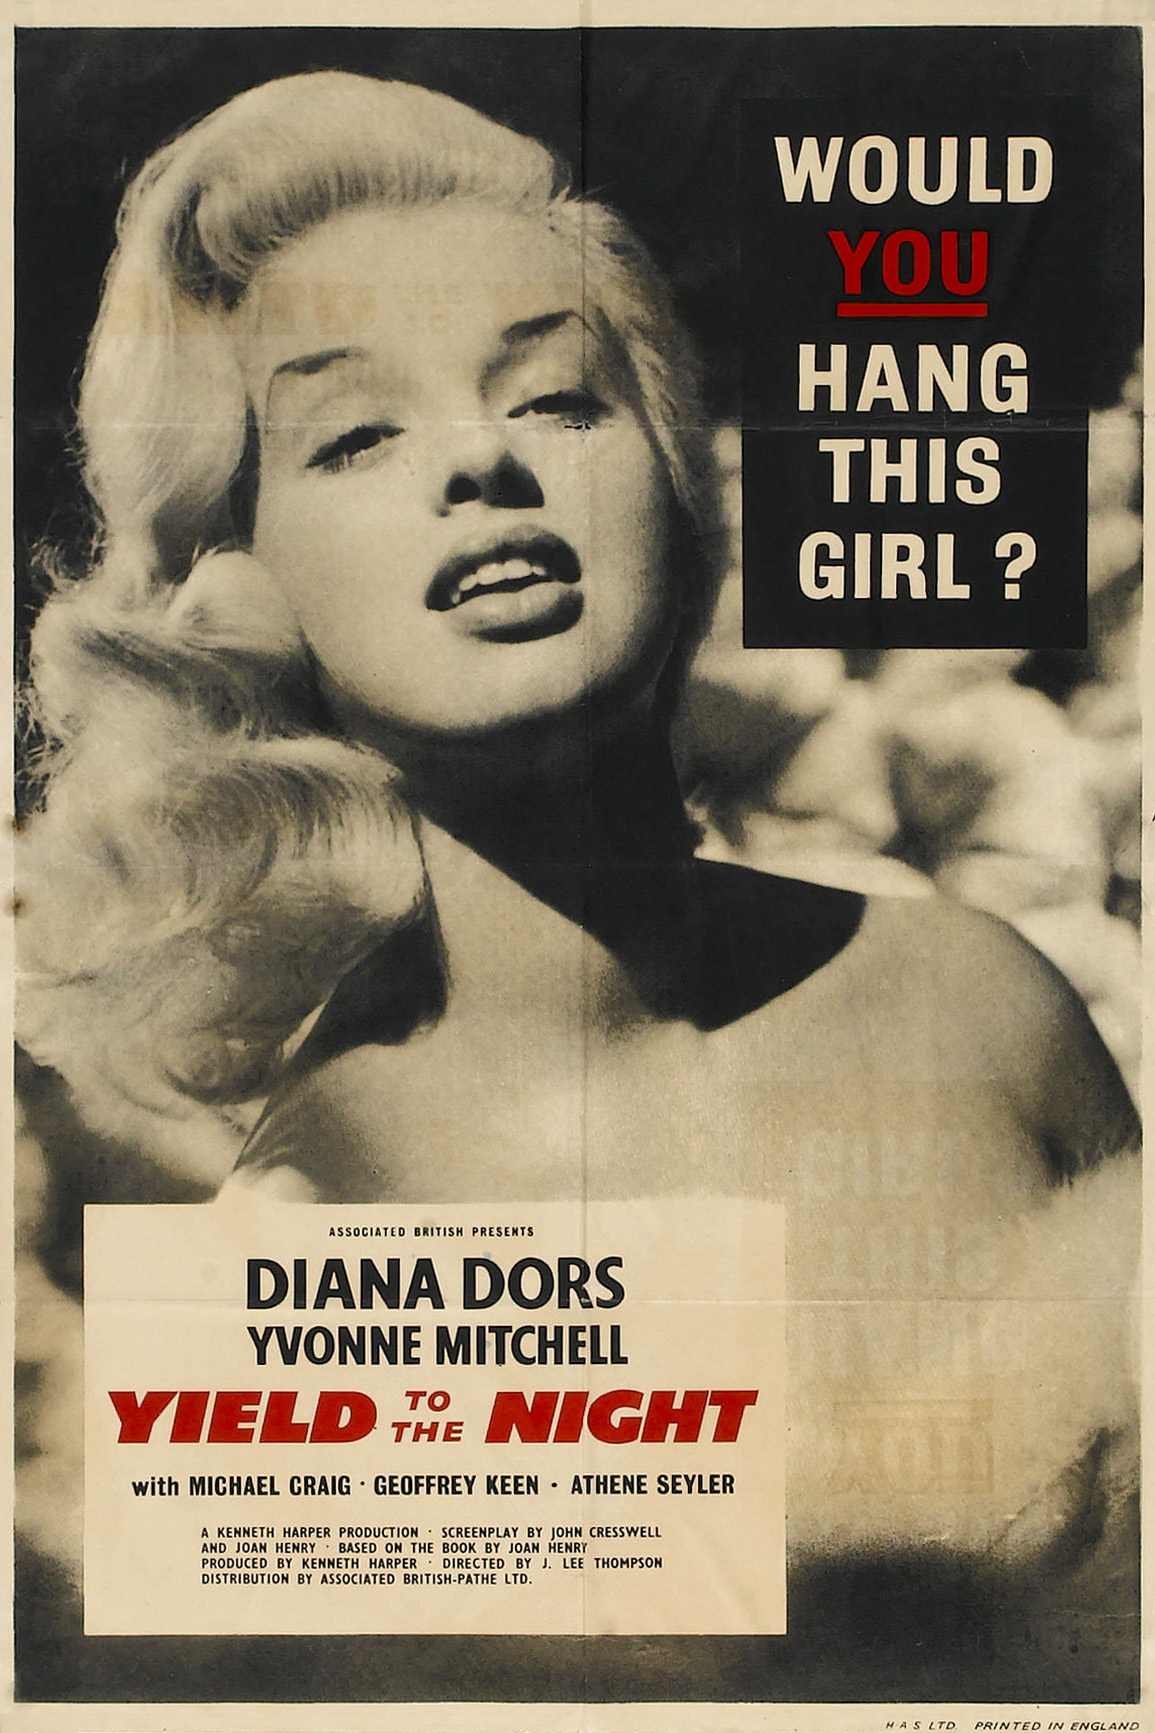 Yield To The Night (1956) Diana Dors